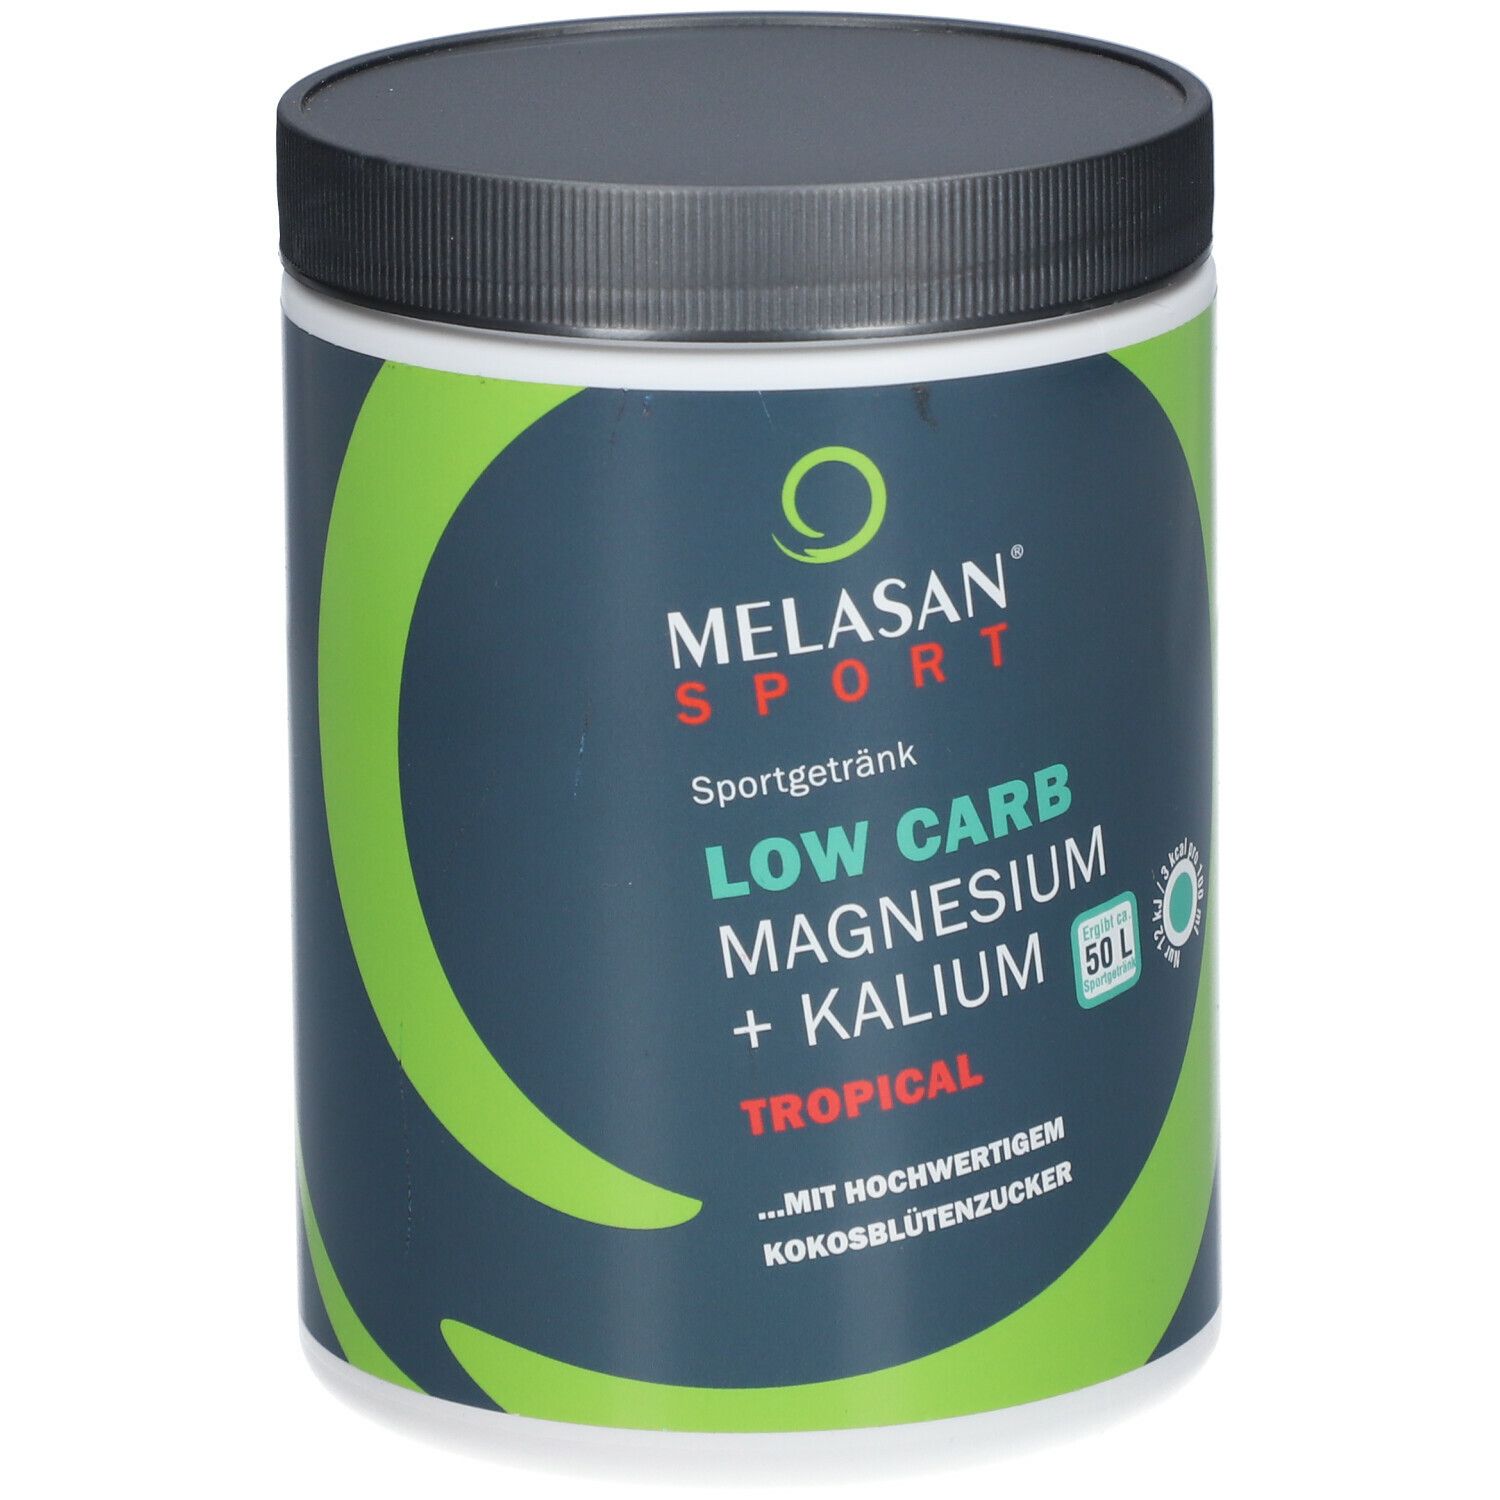 MELASAN® SPORT Magnesium + Kalium Tropical